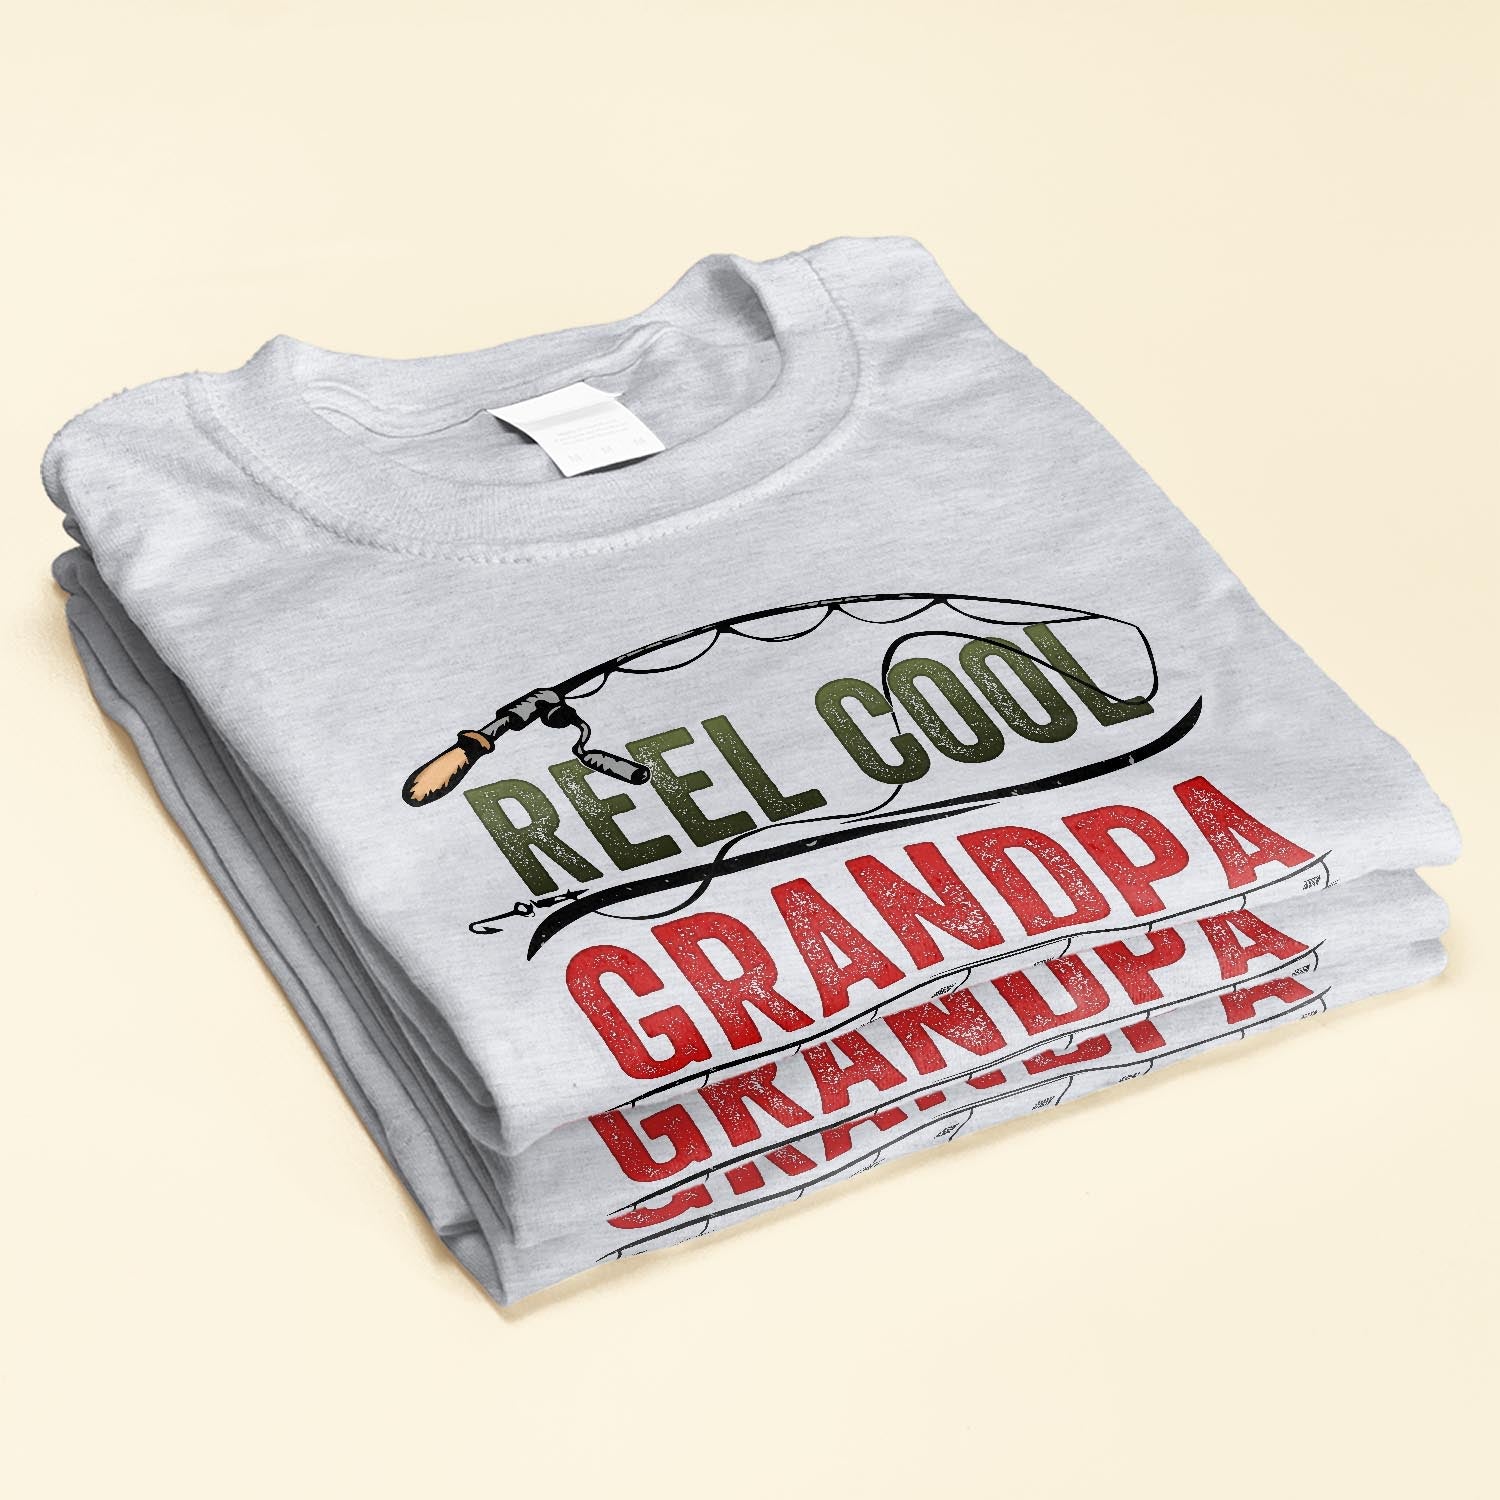 Reel Cool Grandpa - Personalized Shirt